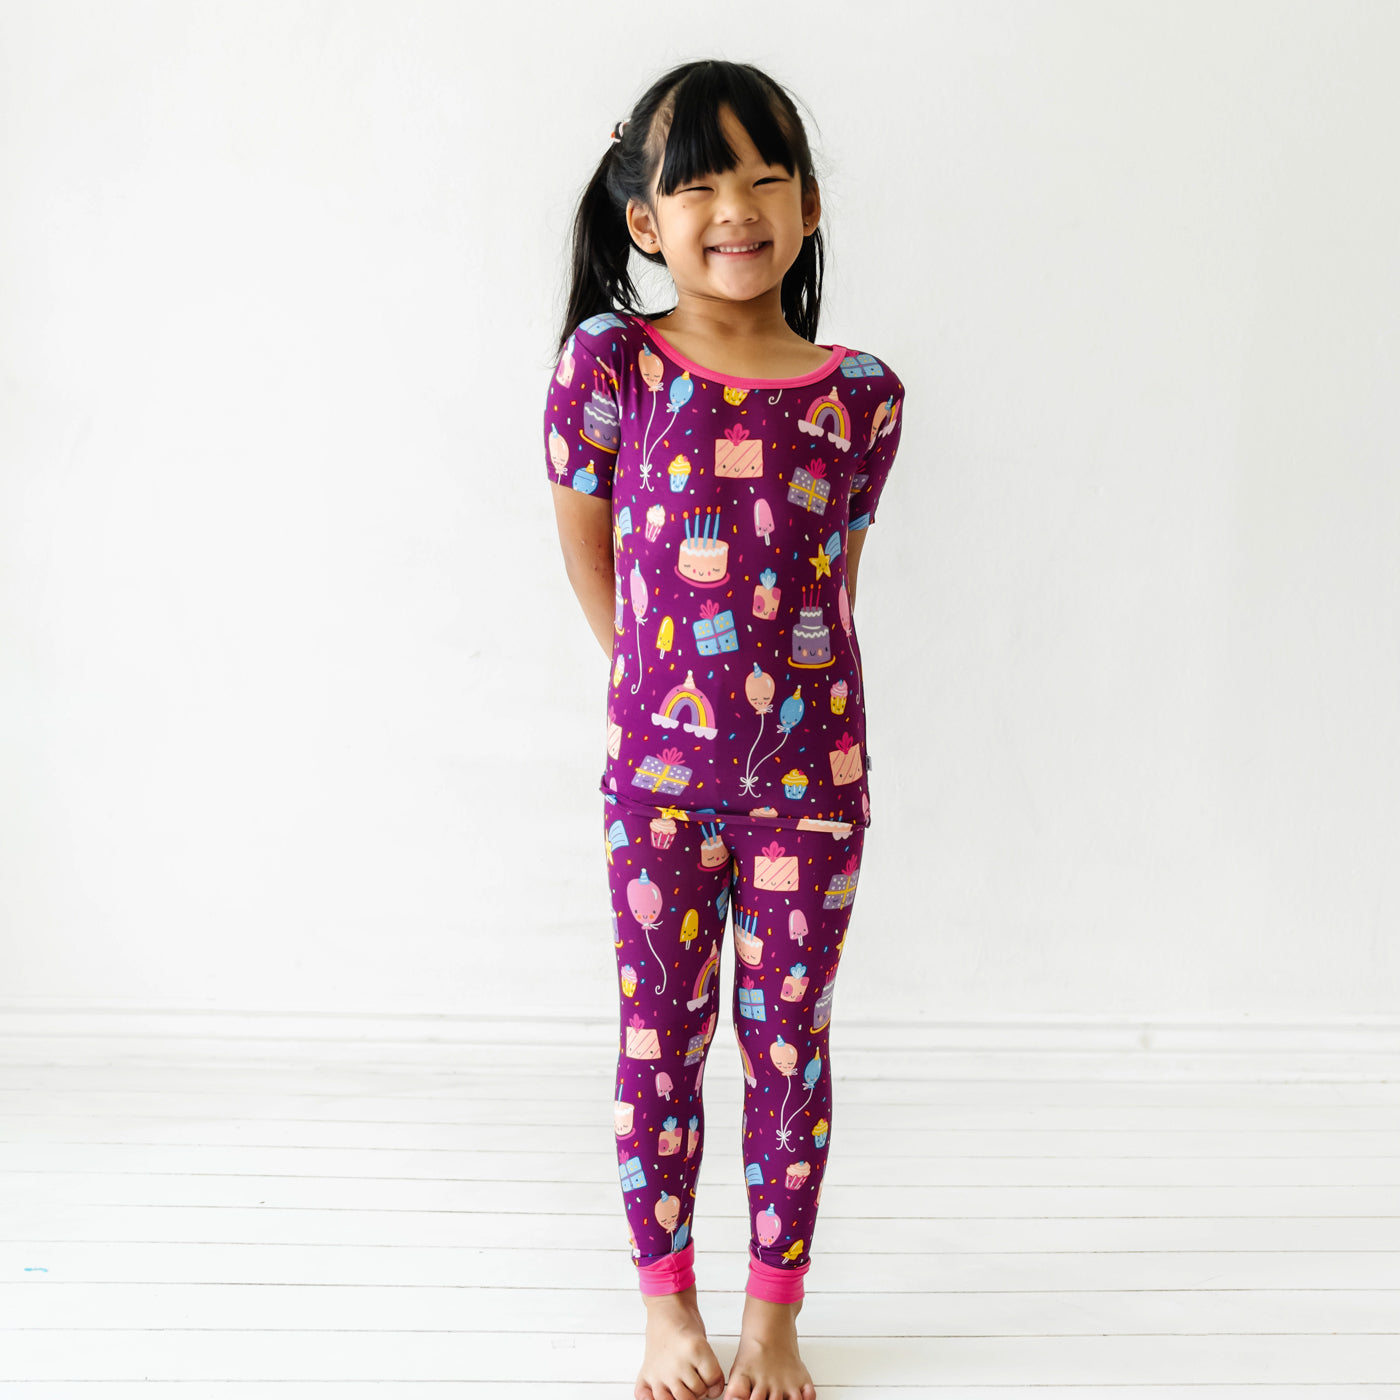 Purple Birthday Wishes Two-Piece Short Sleeve Pajama Set - Little